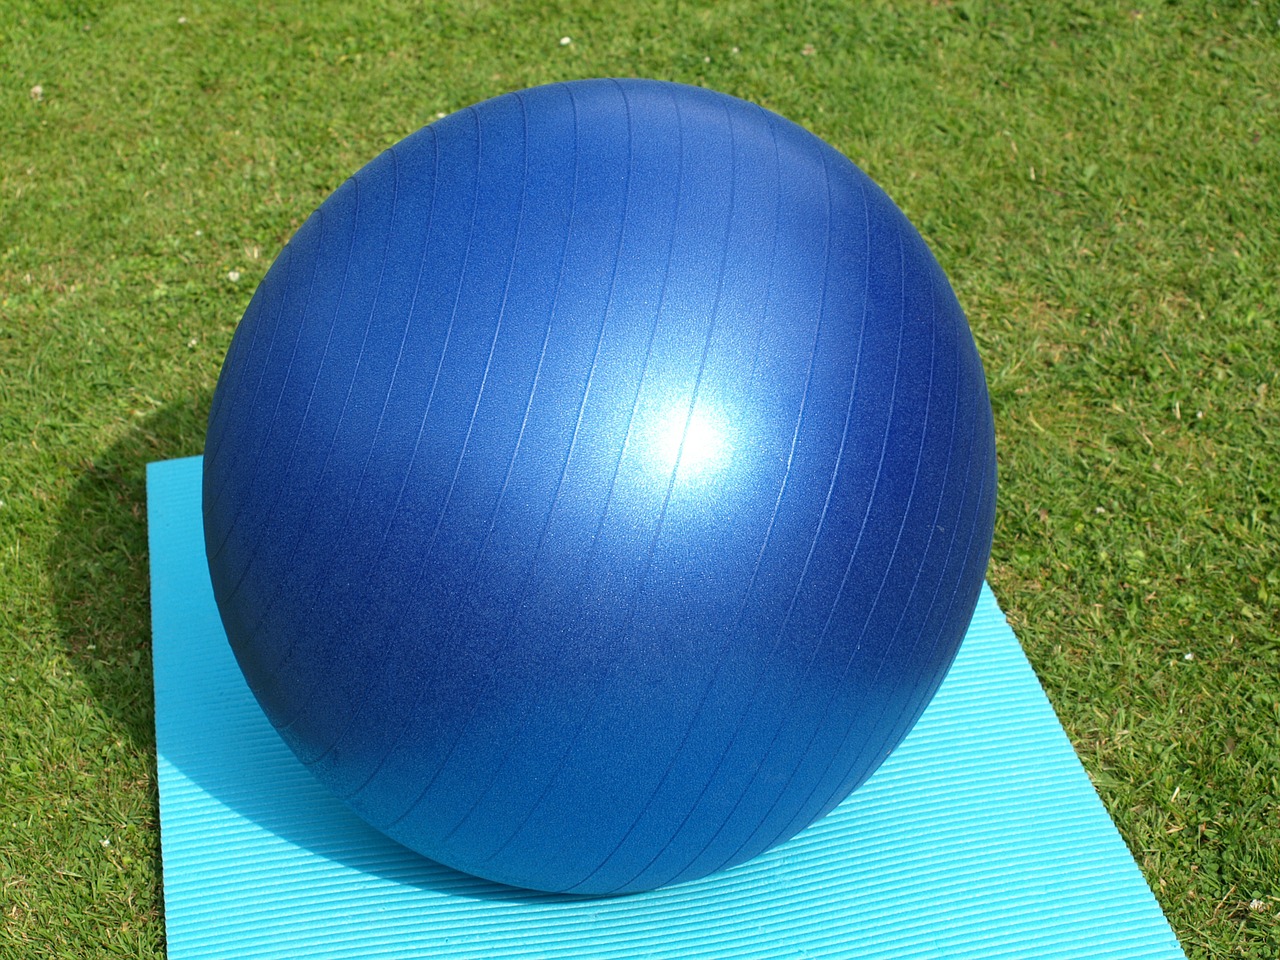 exercise-ball-374948_1280